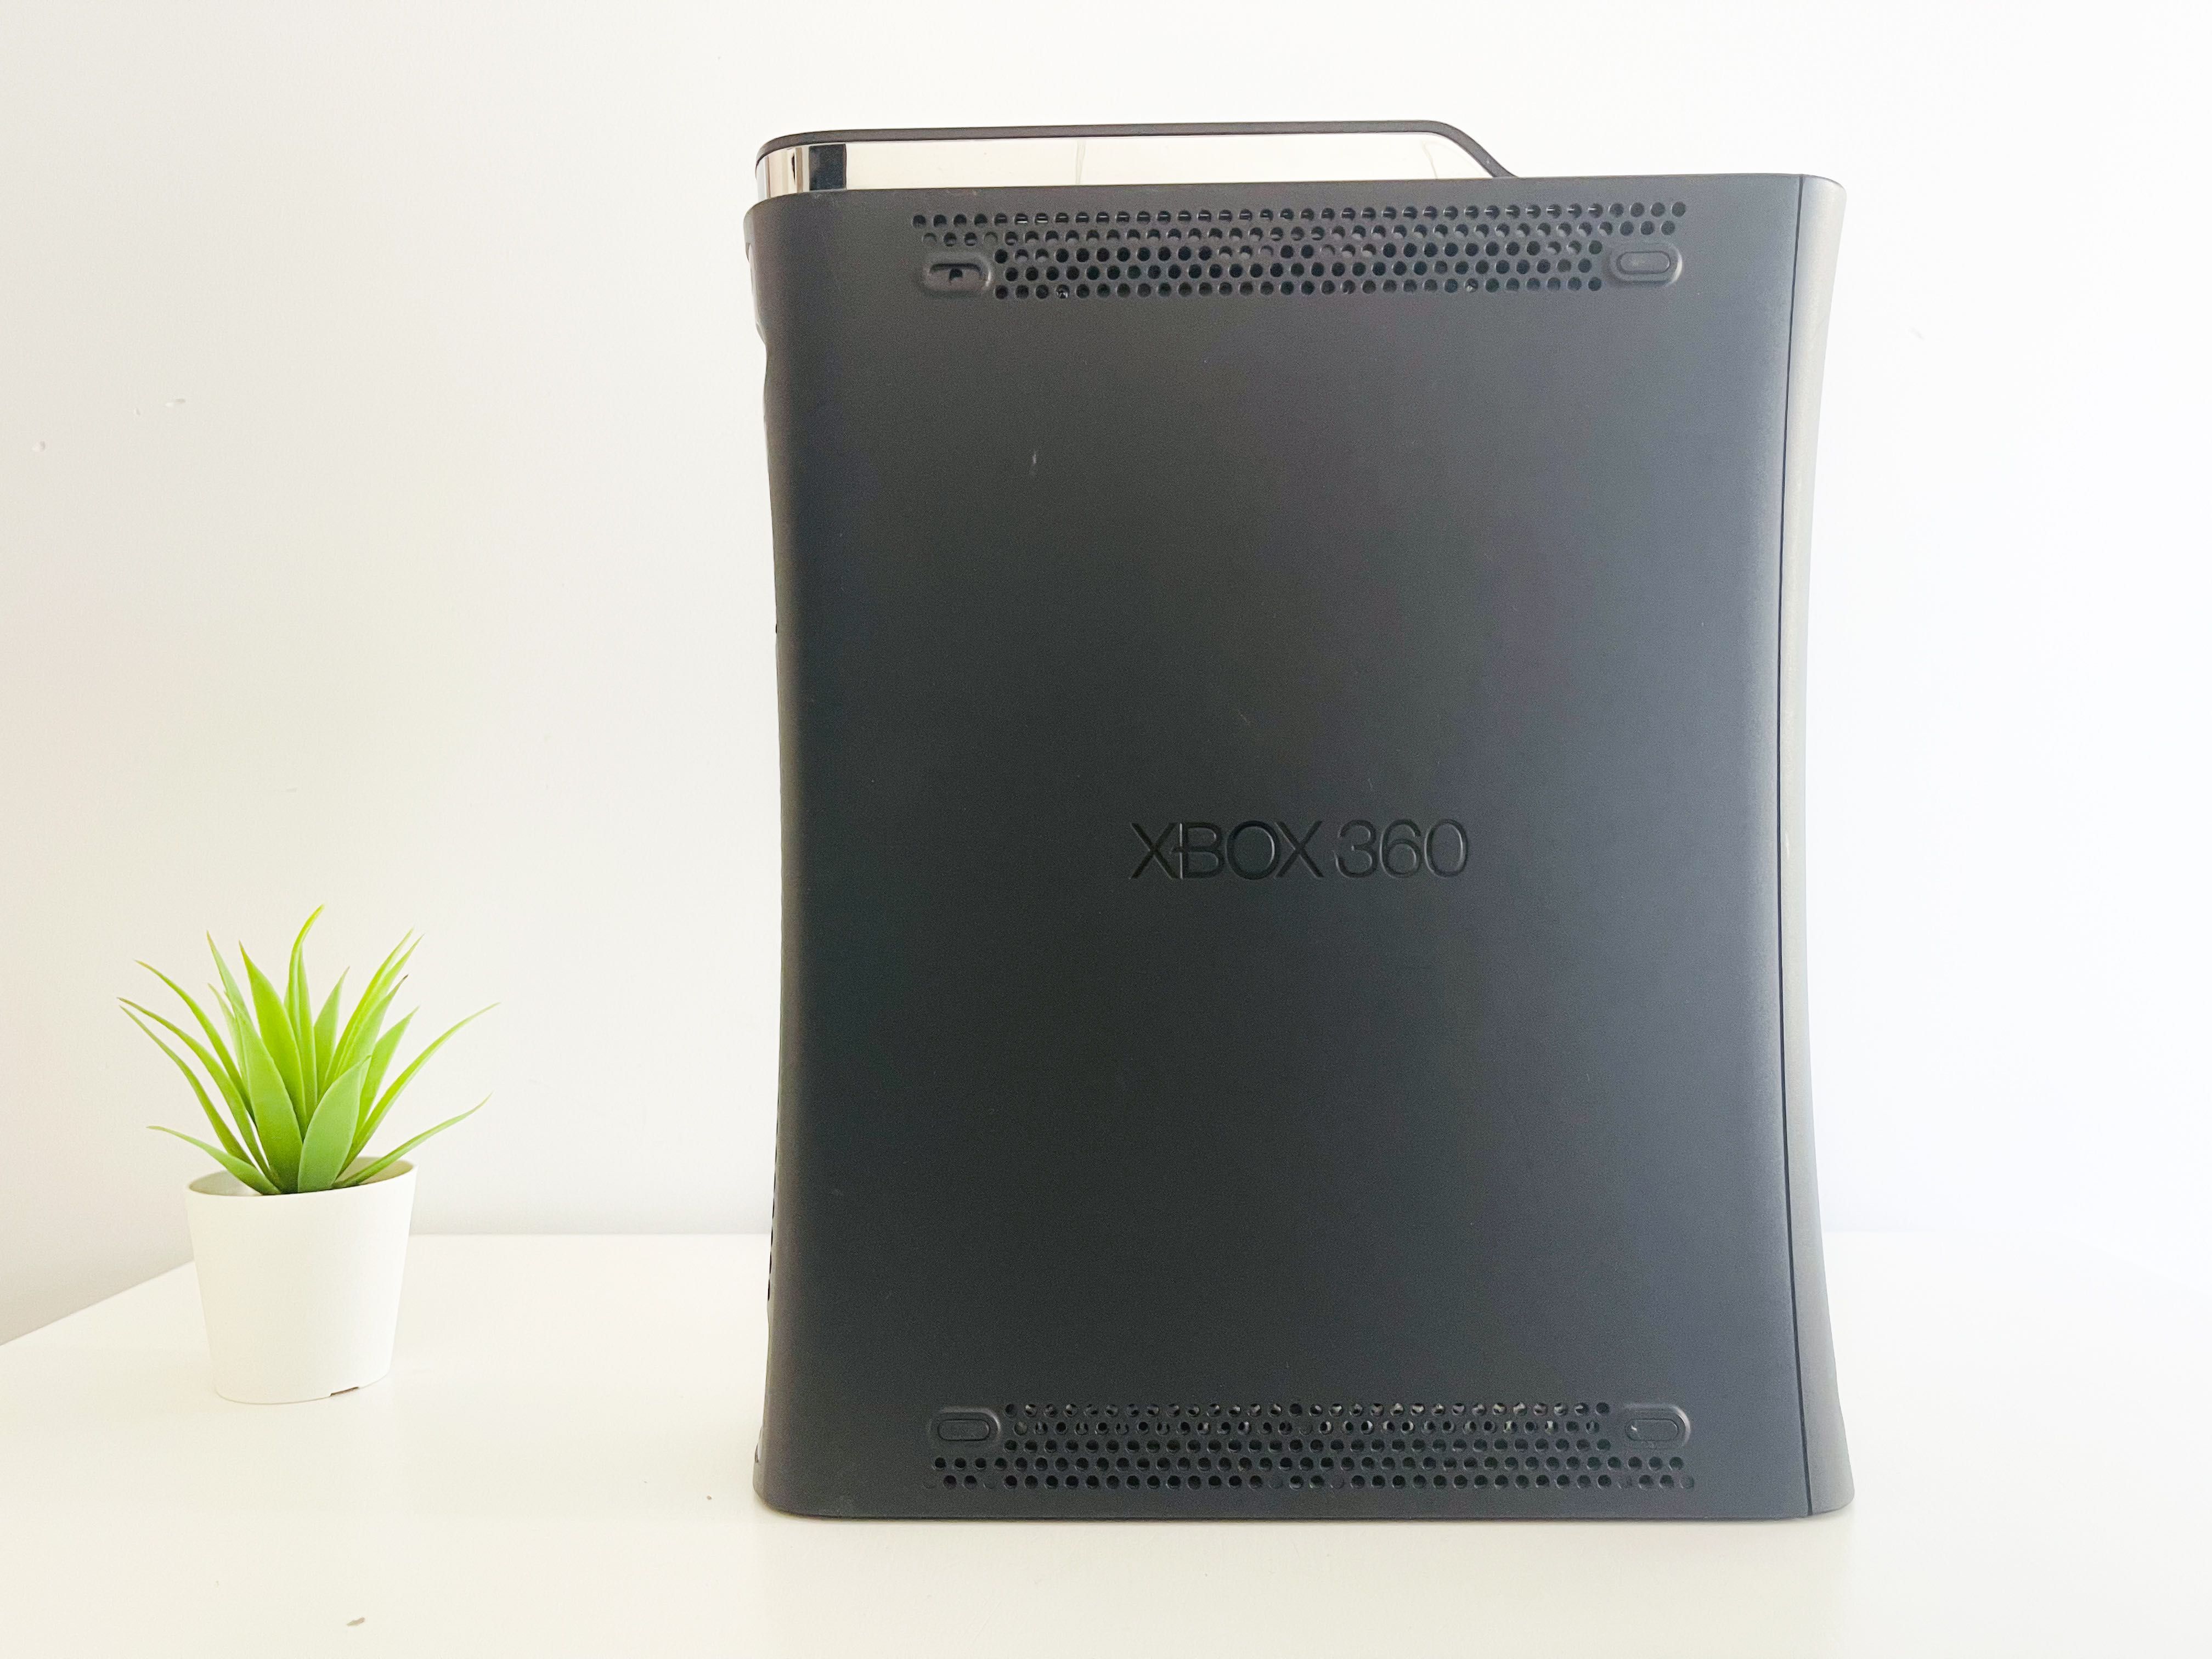 Xbox 360 c/ Disco externo de 120GB + Comando